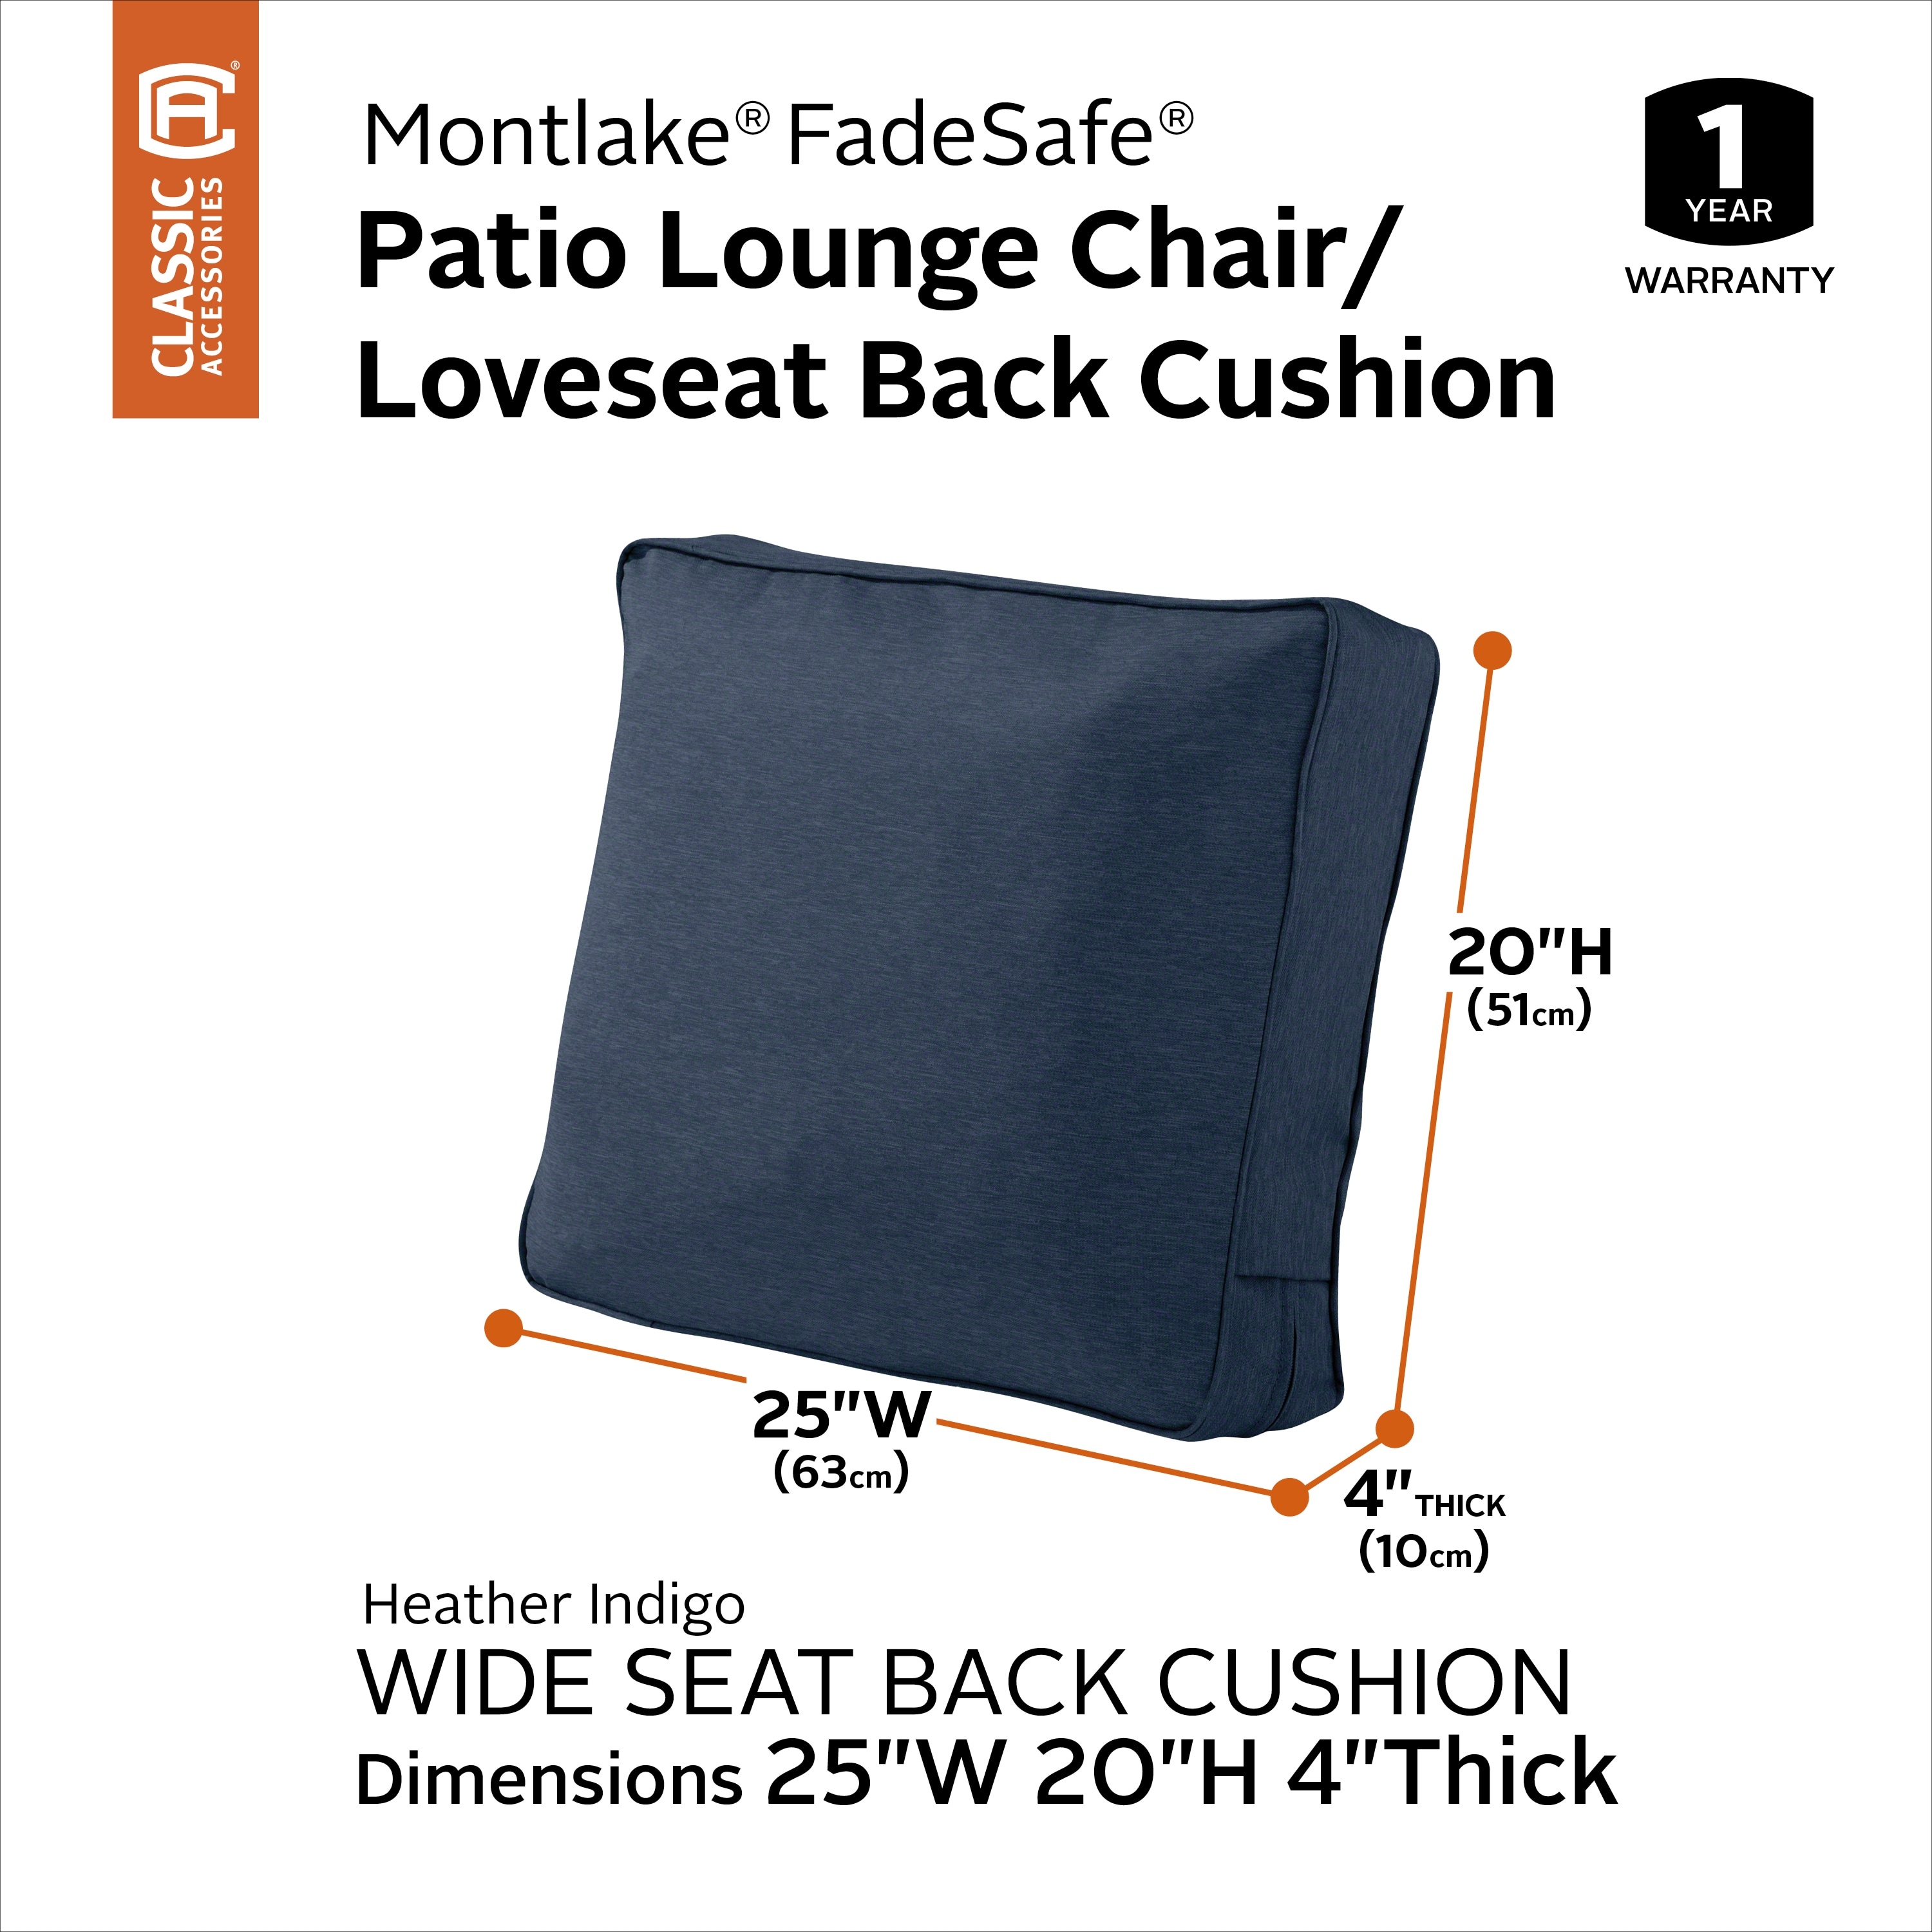 Classic Accessories Montlake FadeSafe Patio Lounge Chair/Loveseat Back Cushion